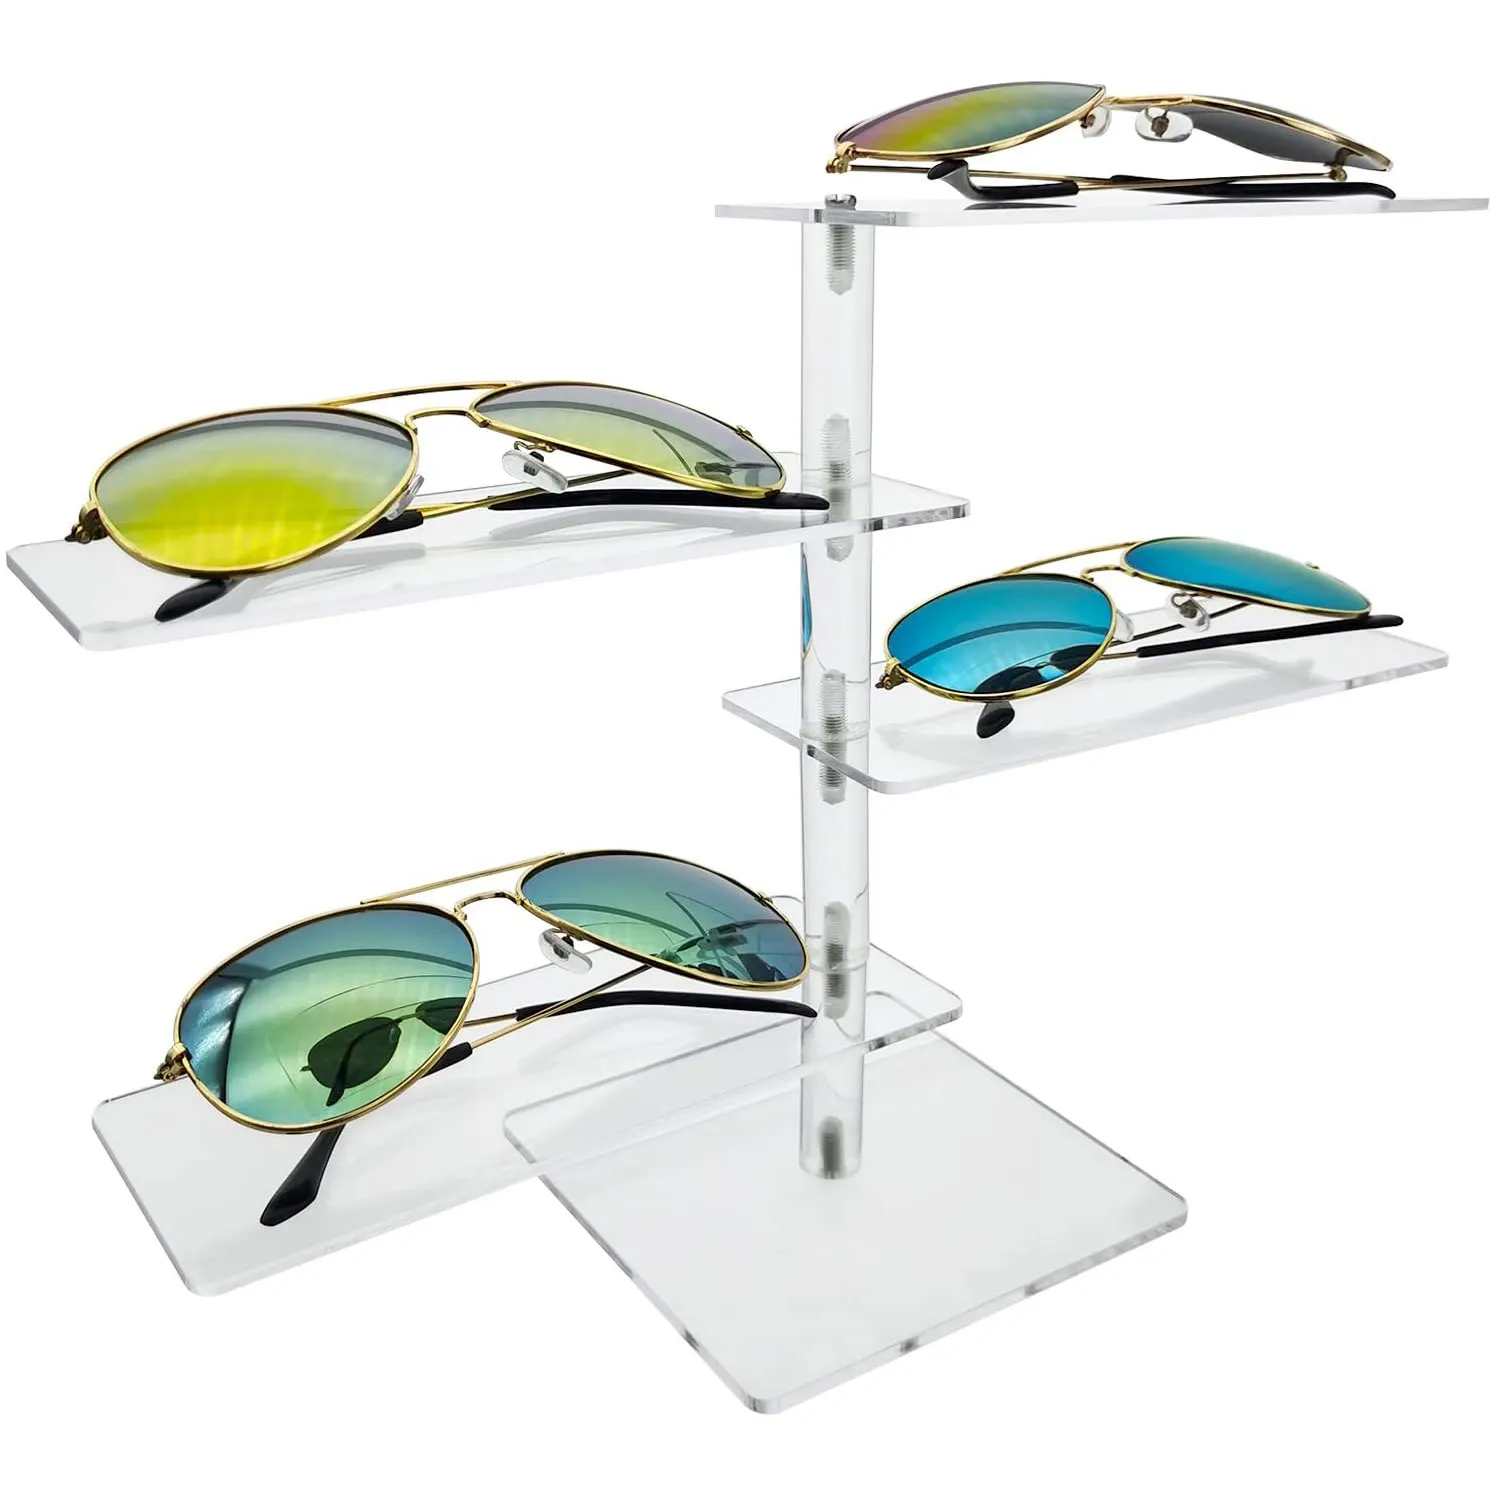 Clsaay 4 שכבה אקריליק משקפי שמש מדף תצוגת מדף משקפיים מציג תכשיטי שולחן עבודה צמיד בעל שרשרת Showcase